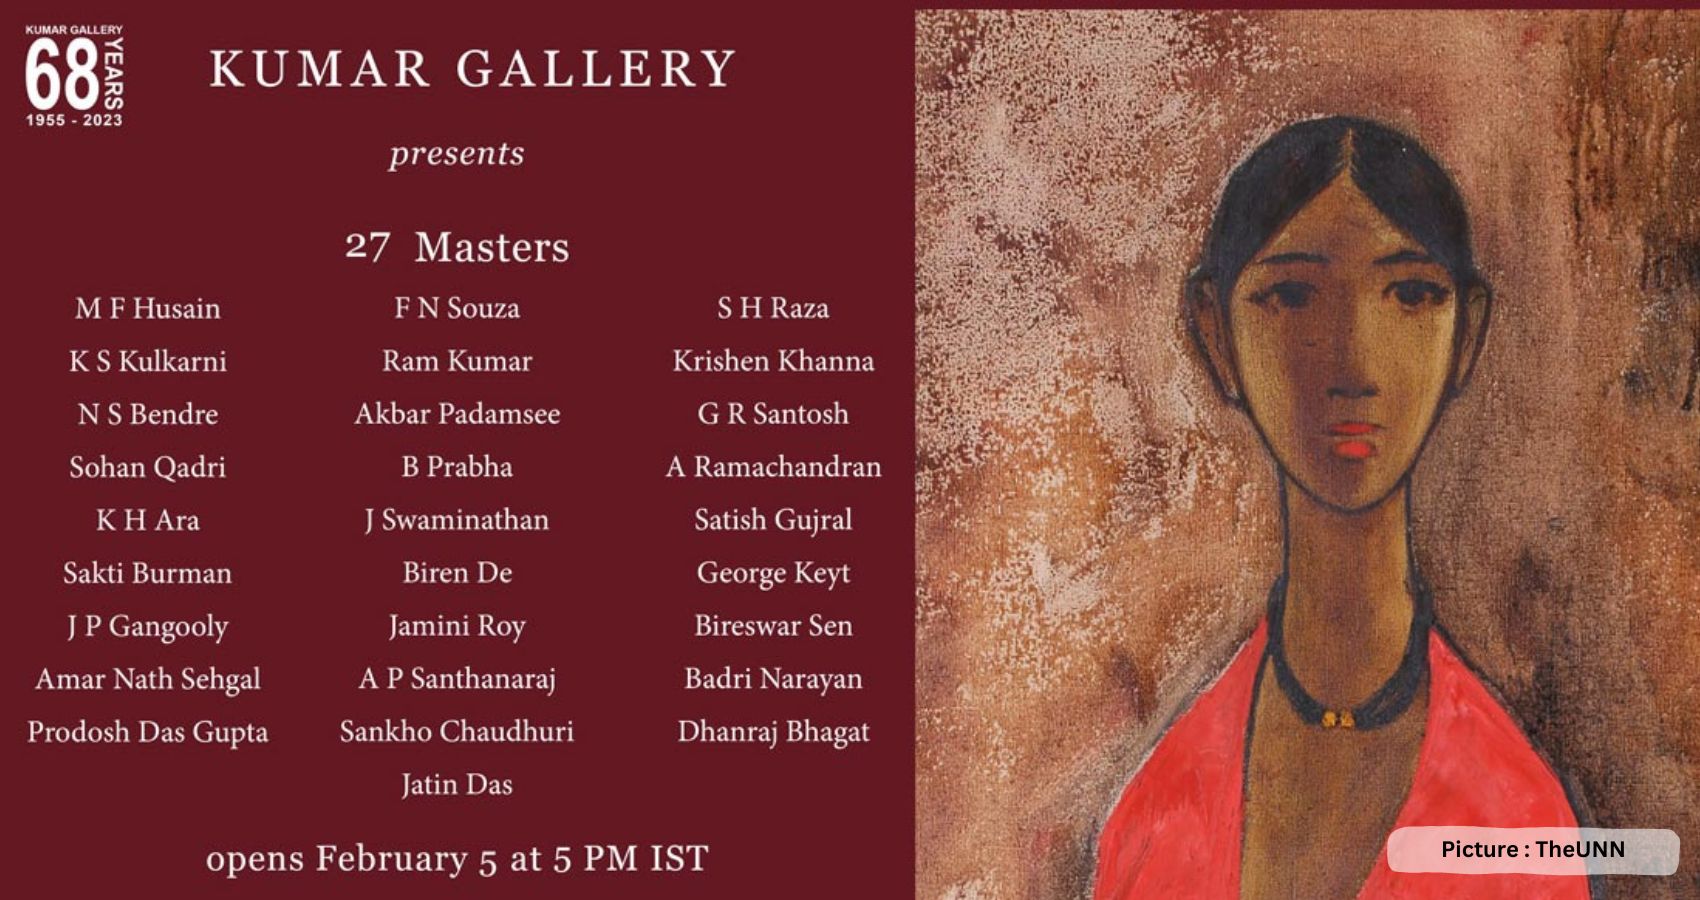 Kumar Gallery presents 27 MASTERS